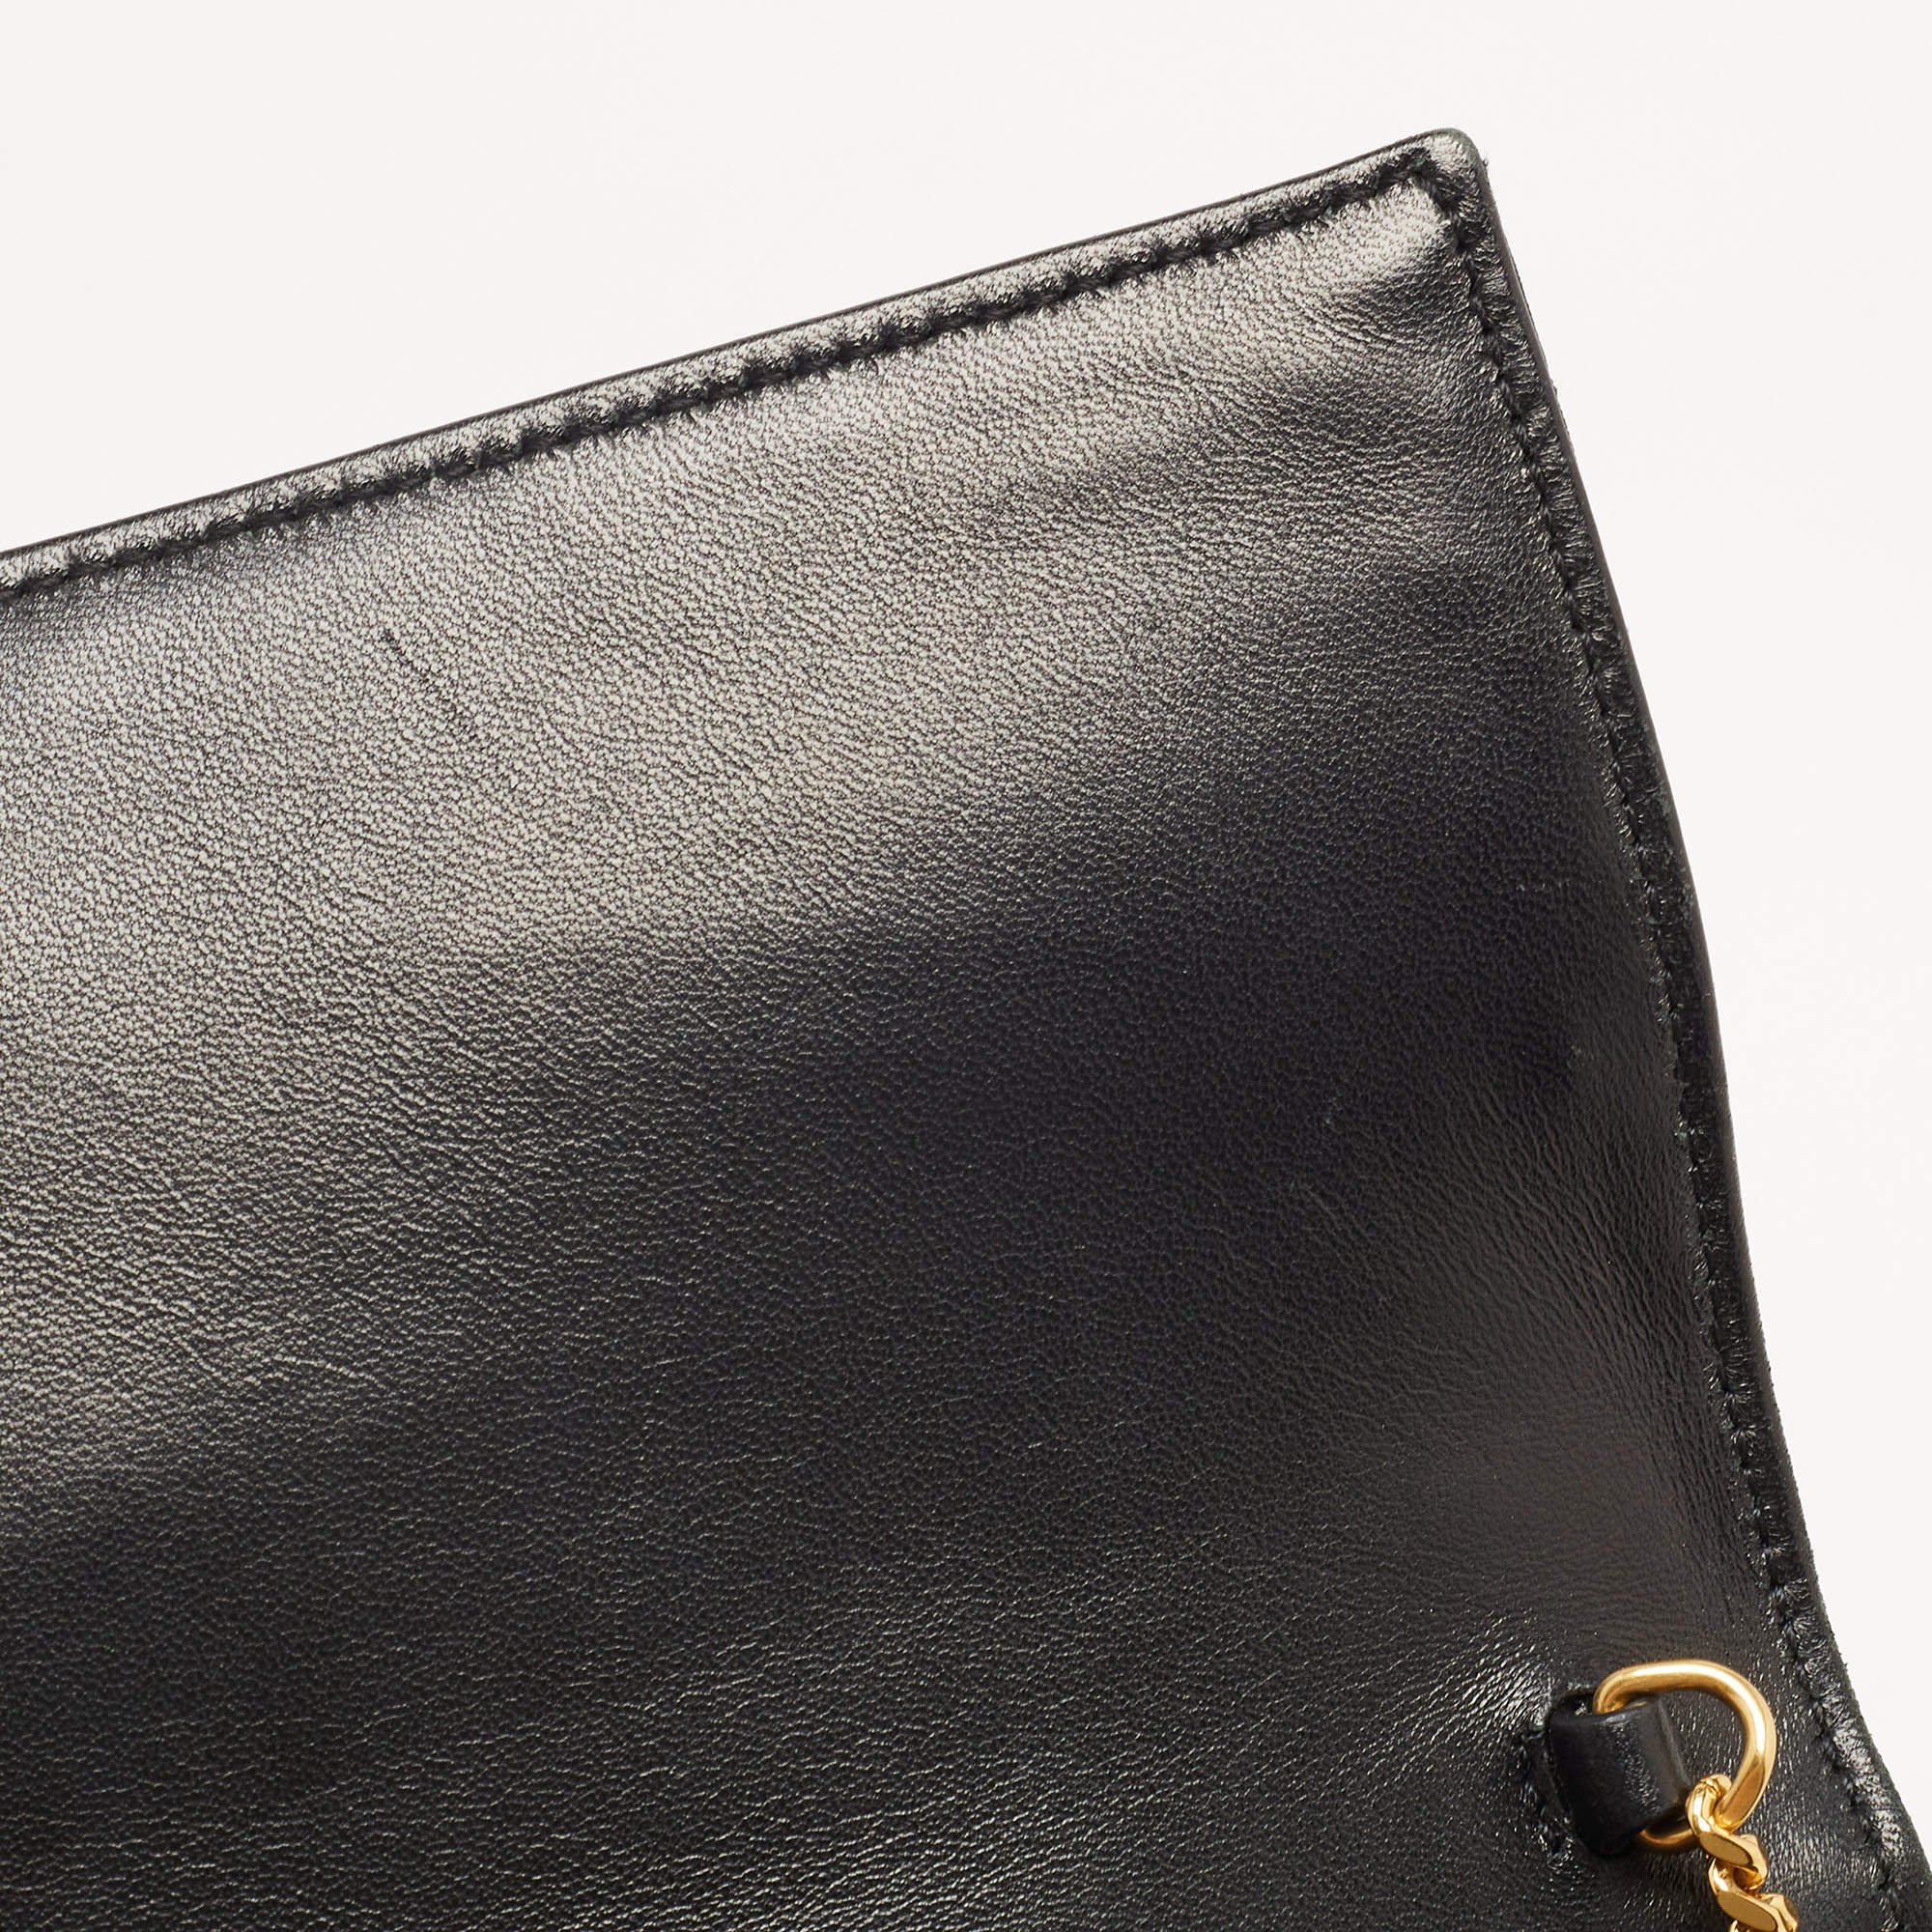 Saint Laurent Victoire Chain Bag In Crinkled Leather Black/Gold